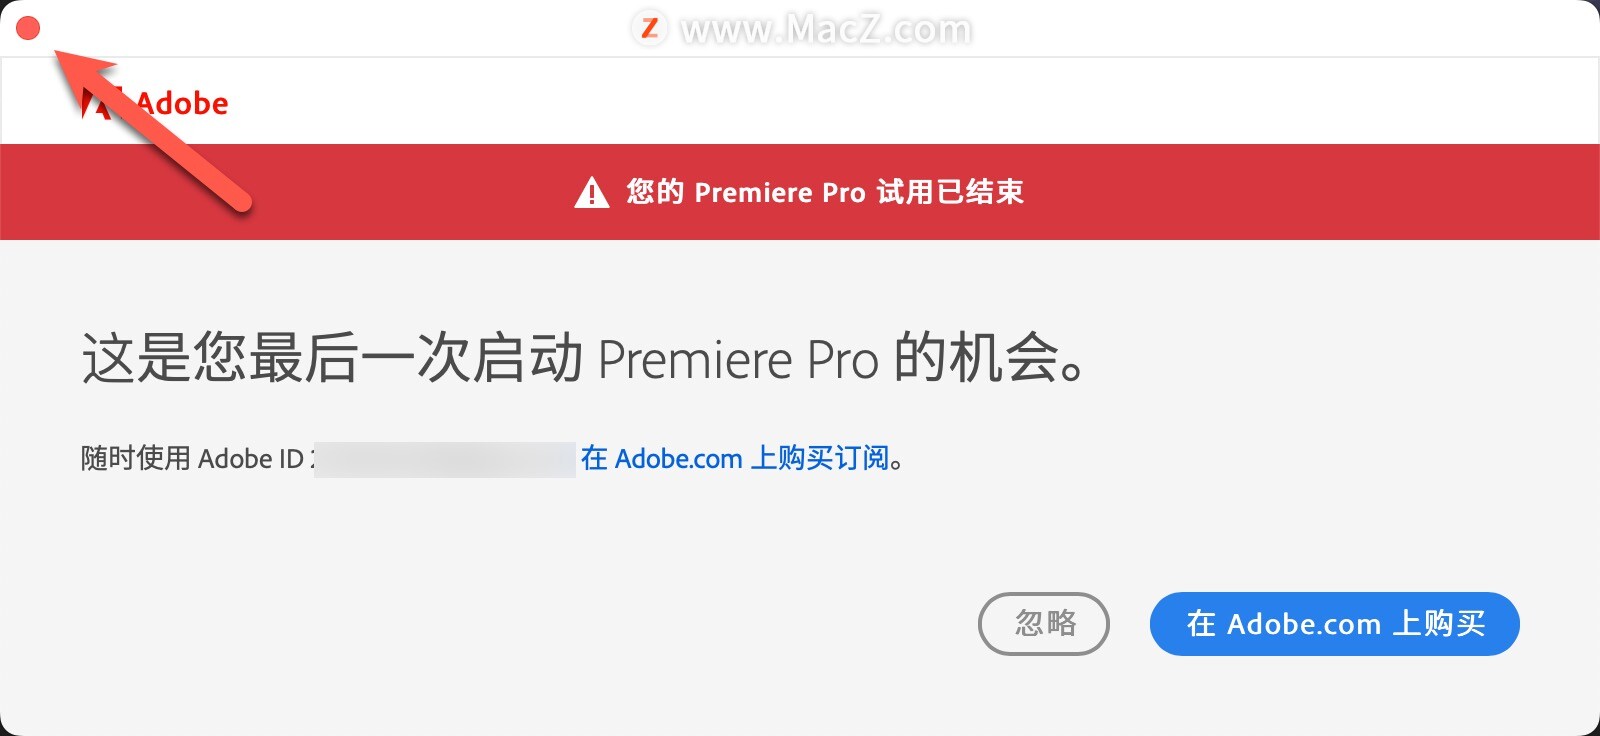 pr 2022中文版-Premiere Pro 2022 for Mac(pr 2022)- Mac下载插图11